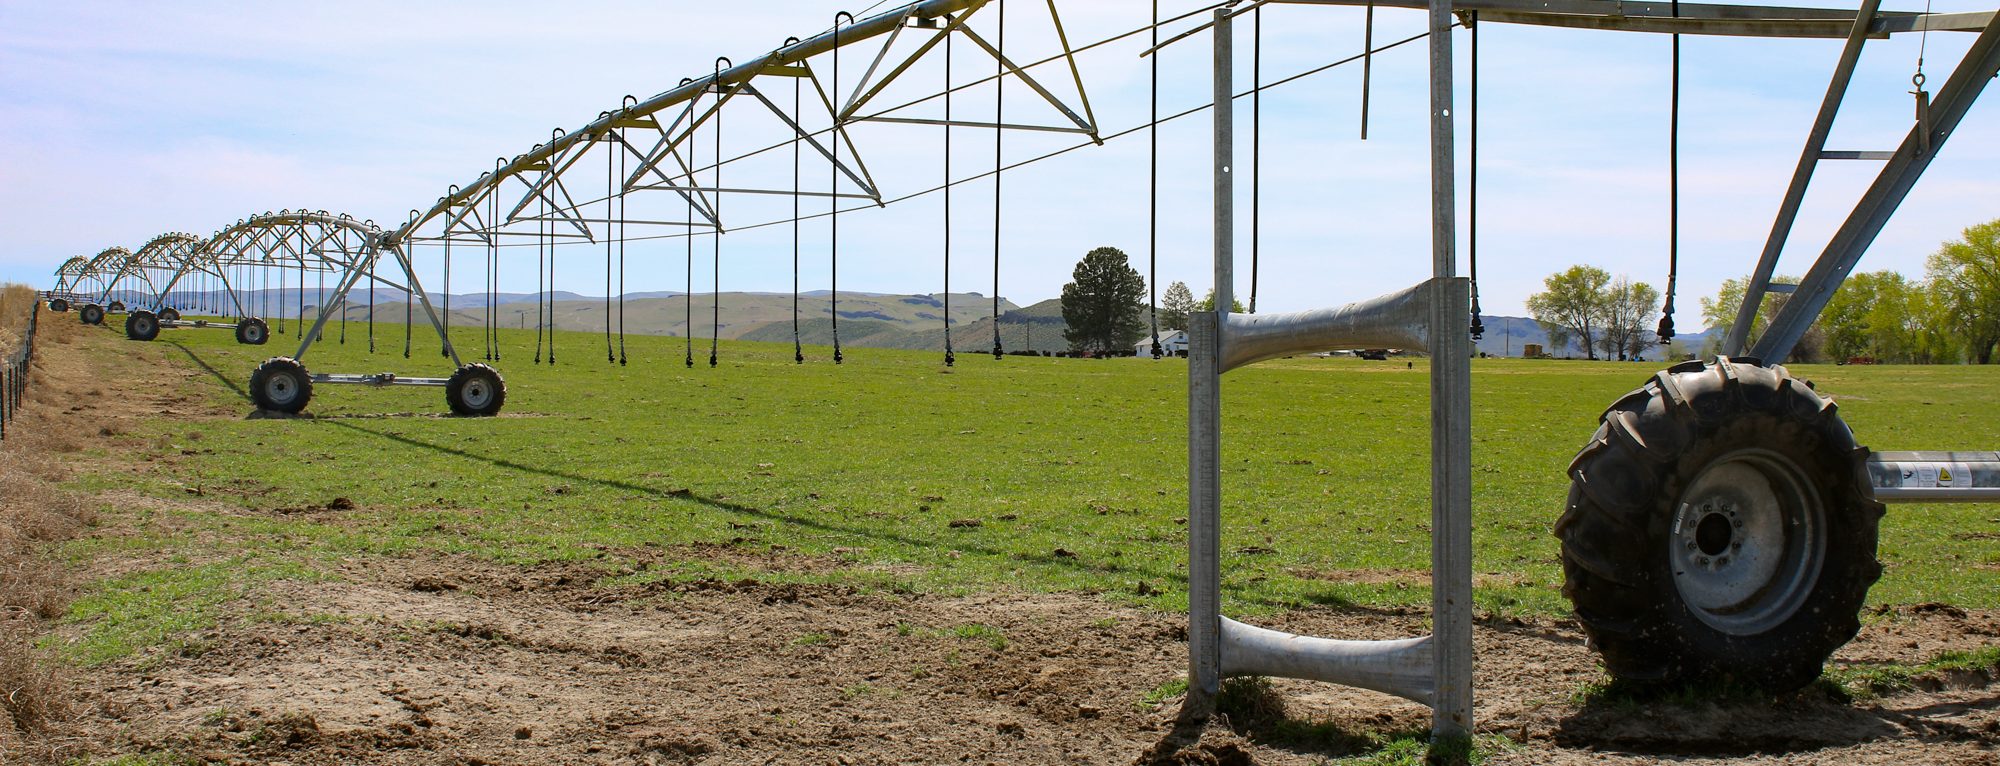 Irrigation pivot at Homedale Alfalfa Farm